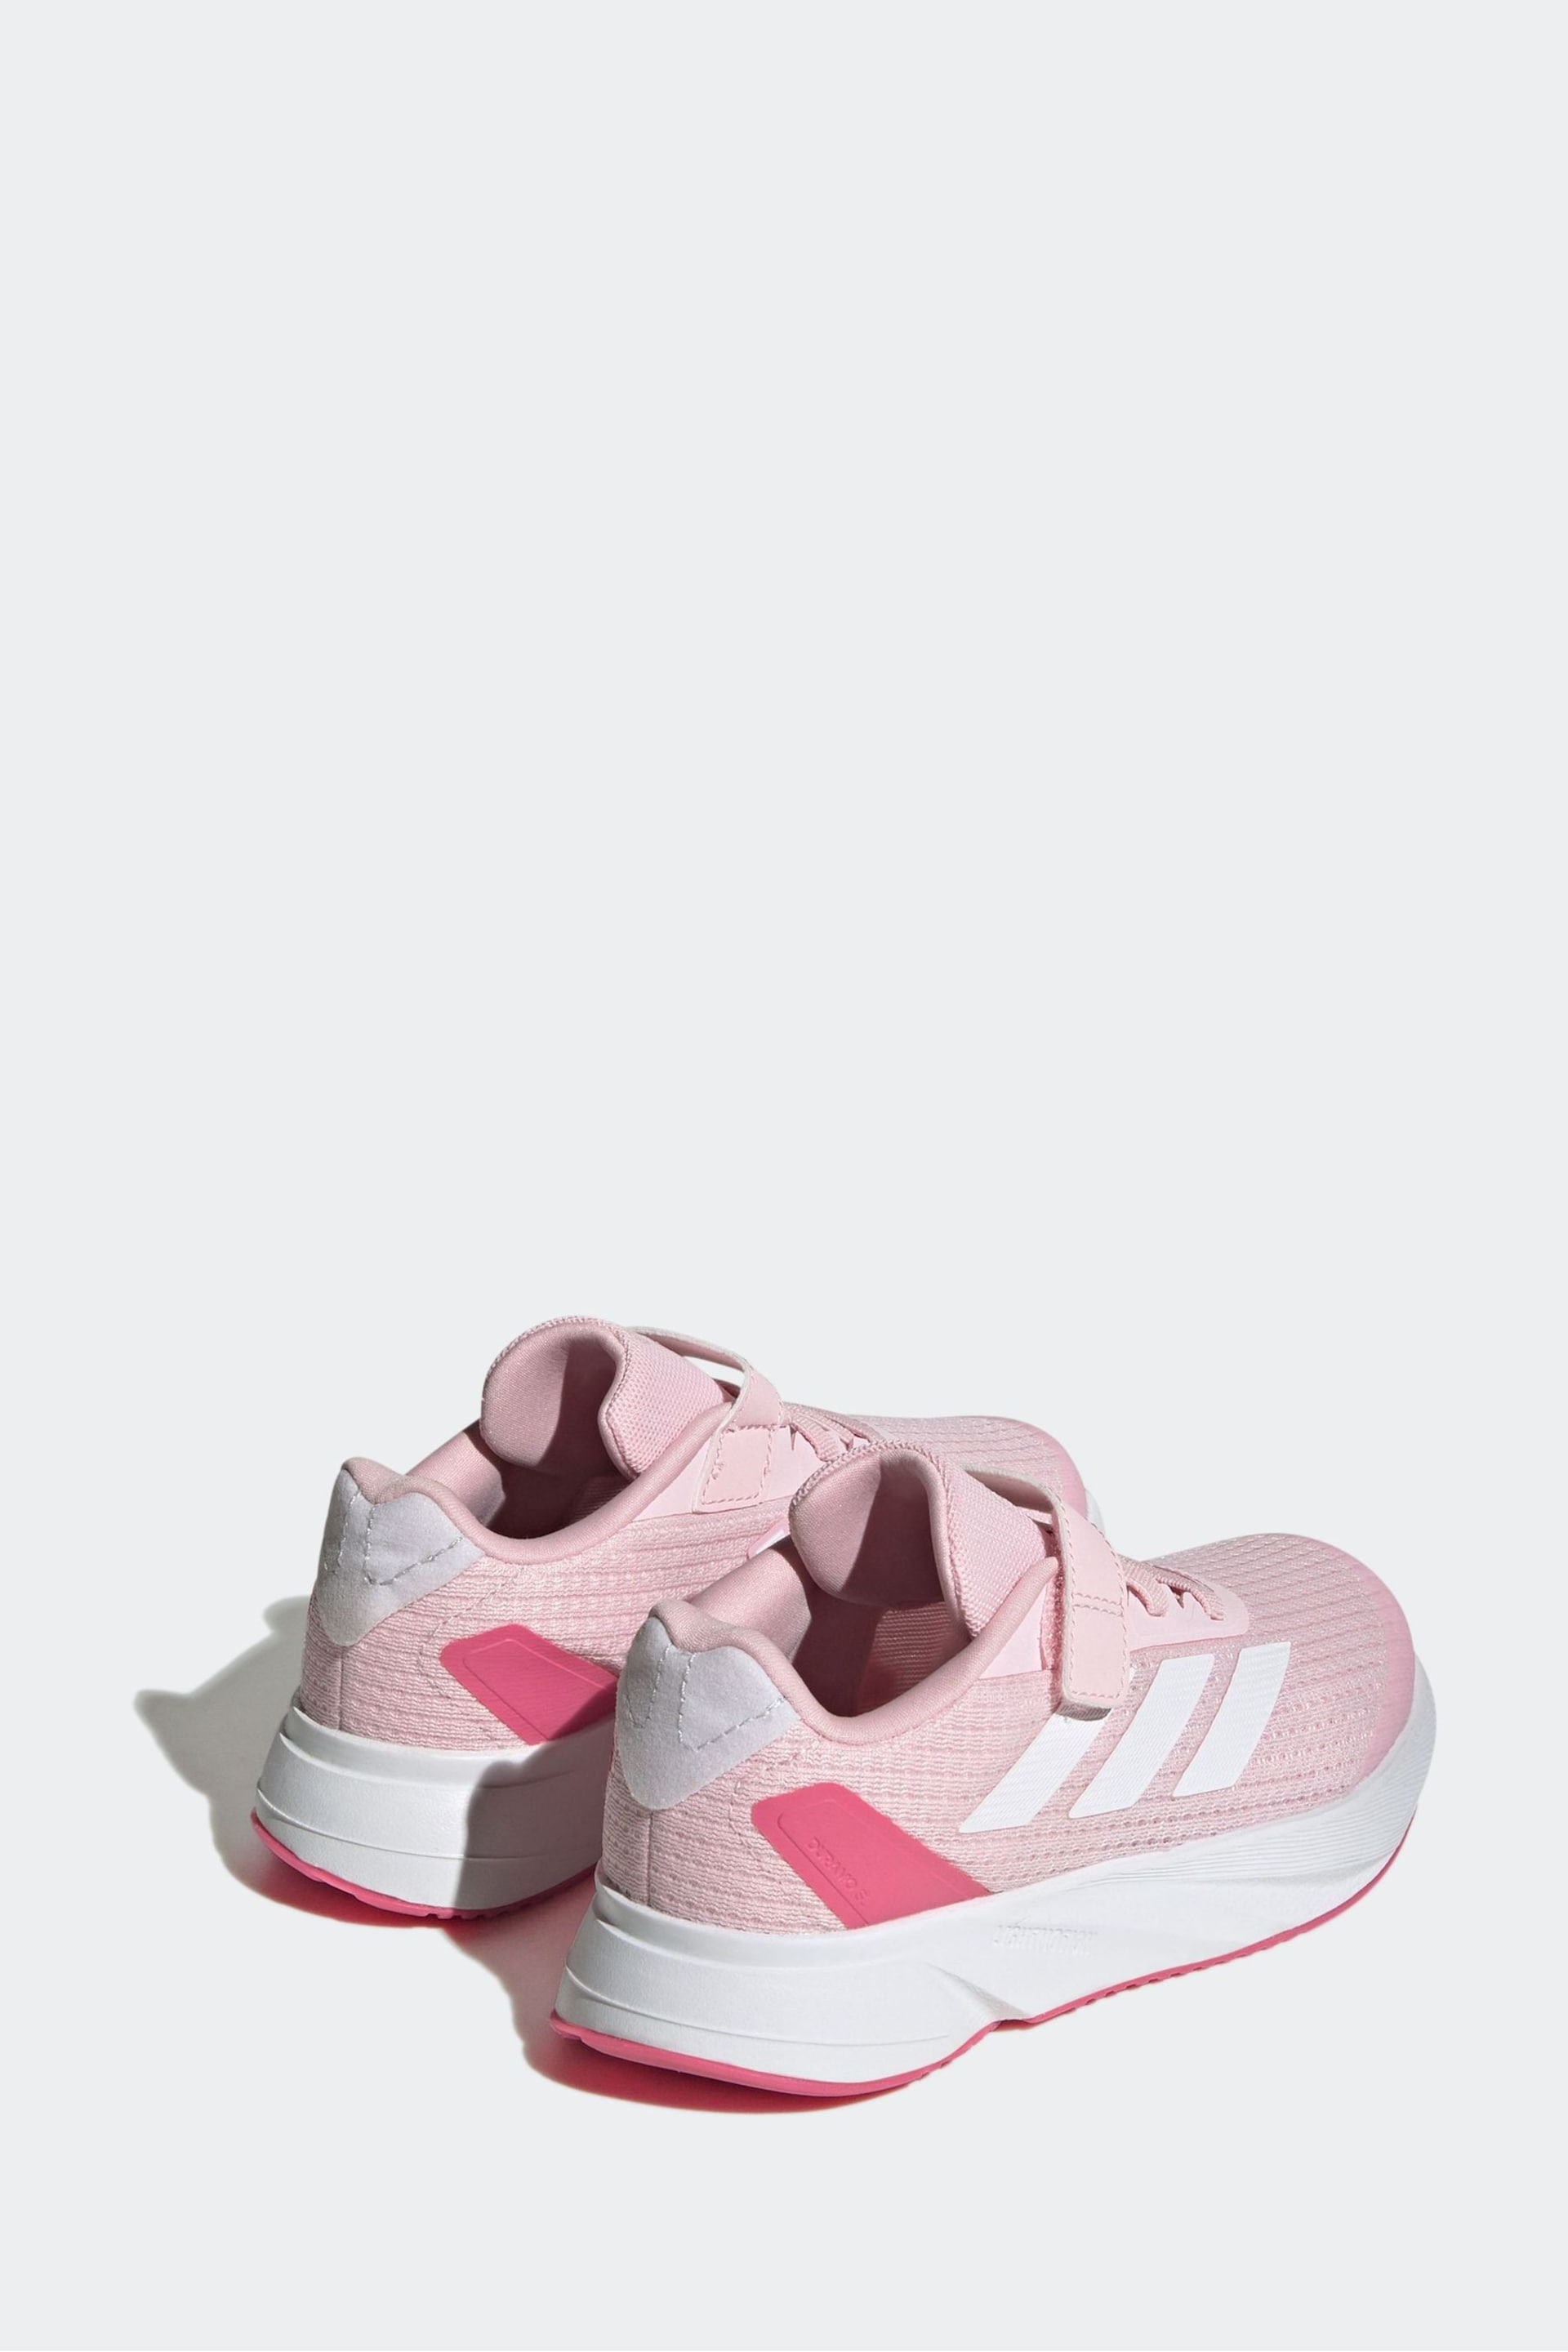 adidas Pink Kids Duramo SL Trainers - Image 3 of 8